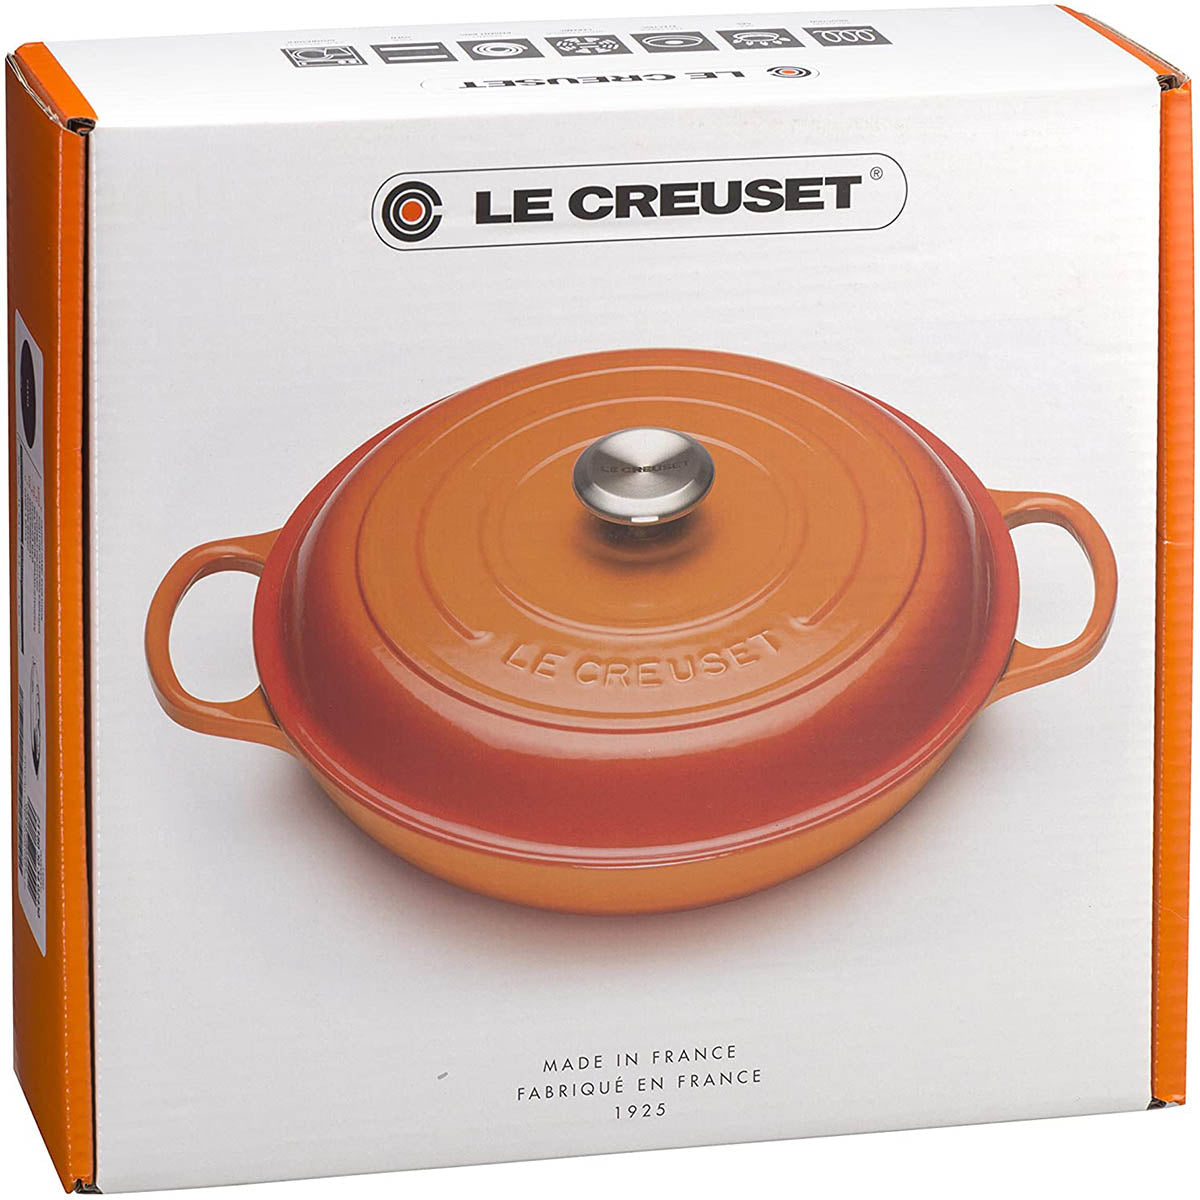 Le Creuset 5-Quart Signature Cast Iron Braiser - Flame